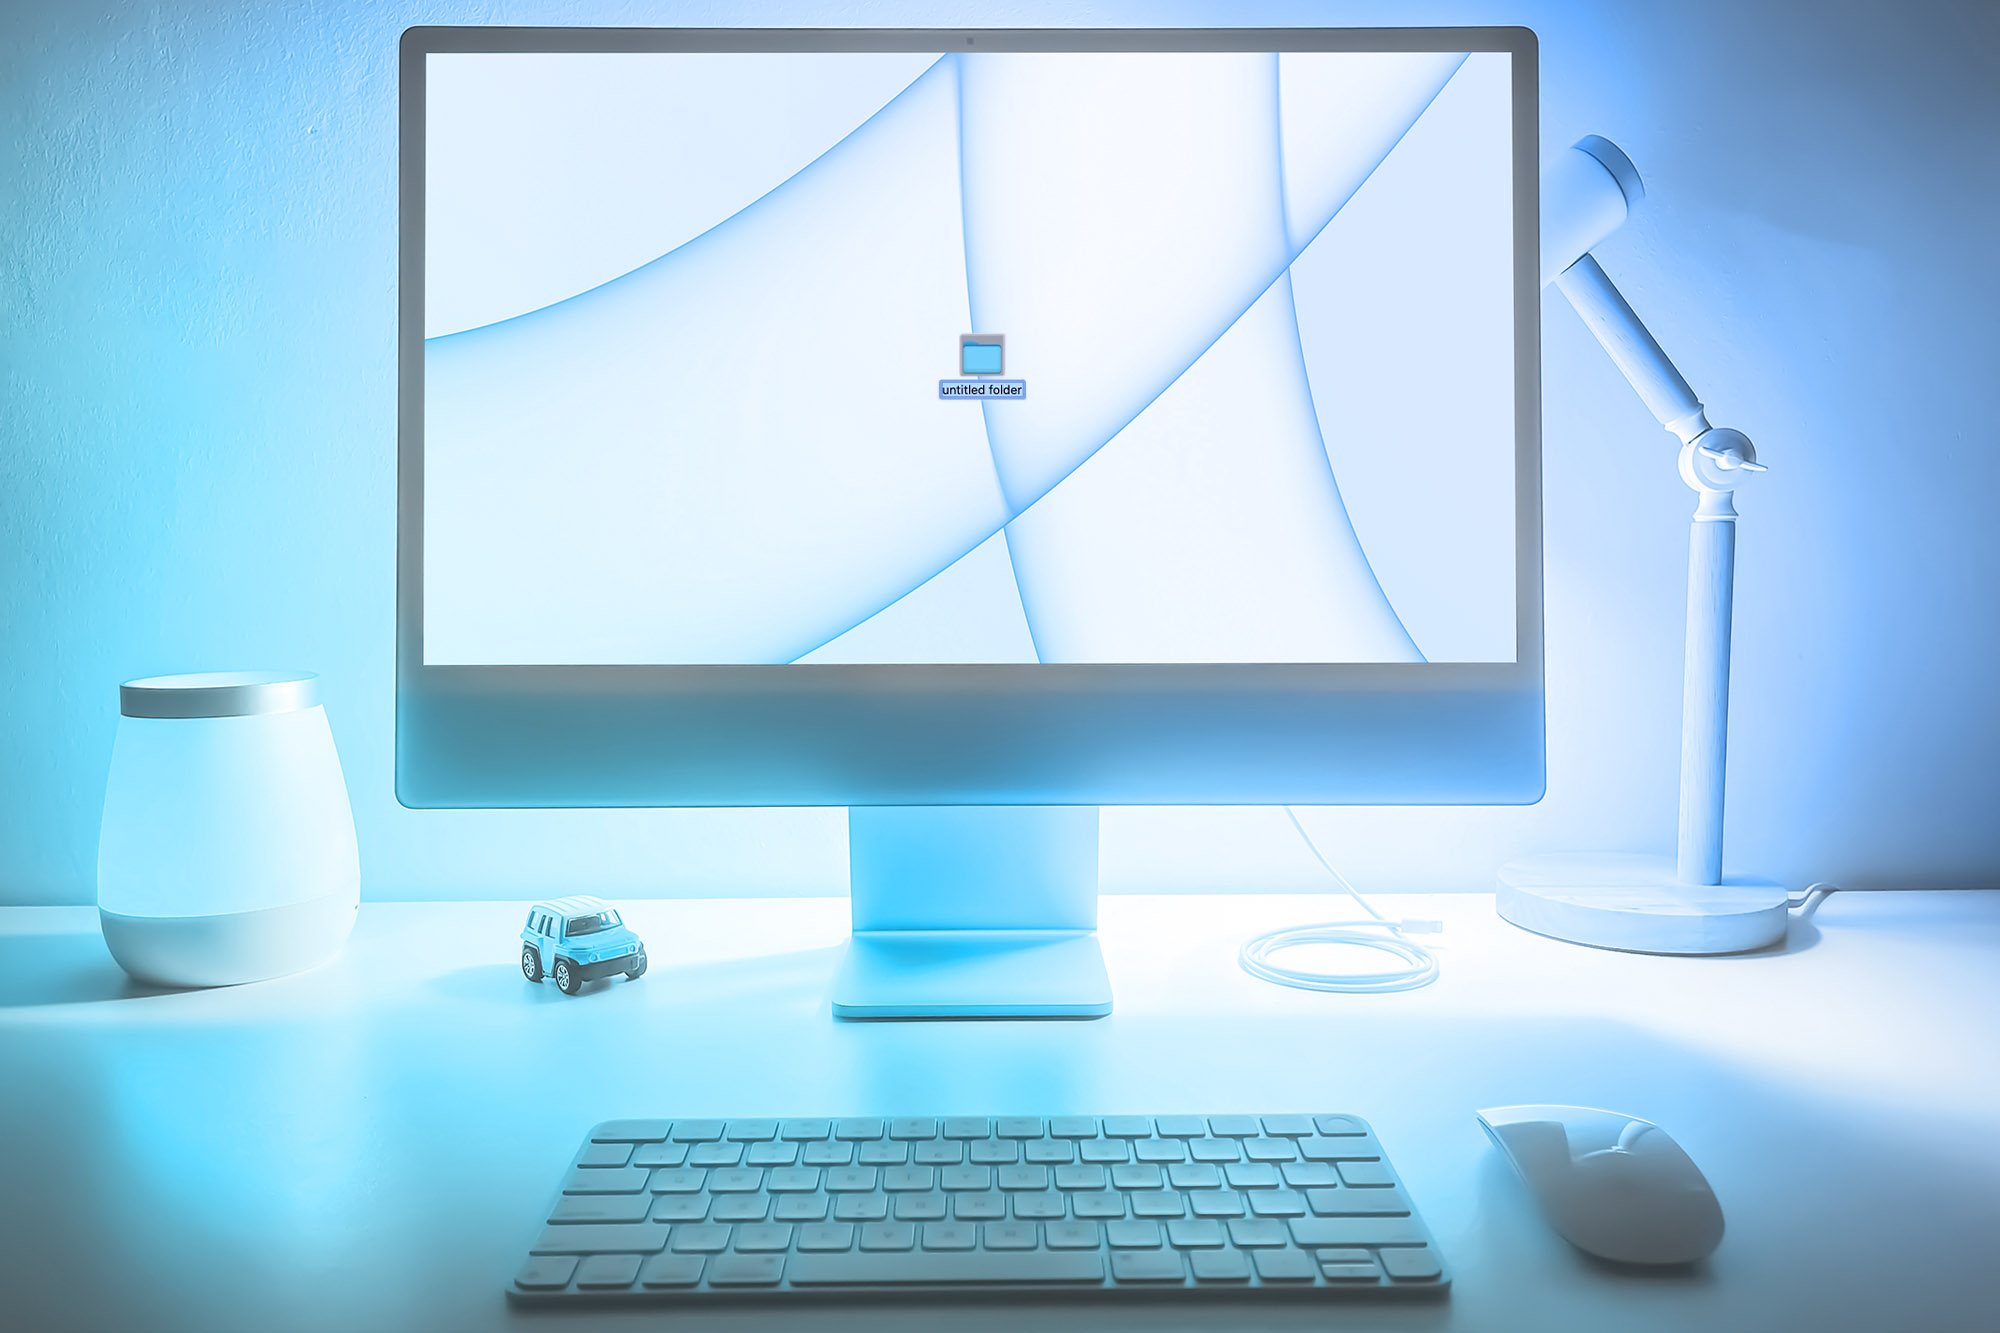 How to create a folder on your desktop | Digital Trends